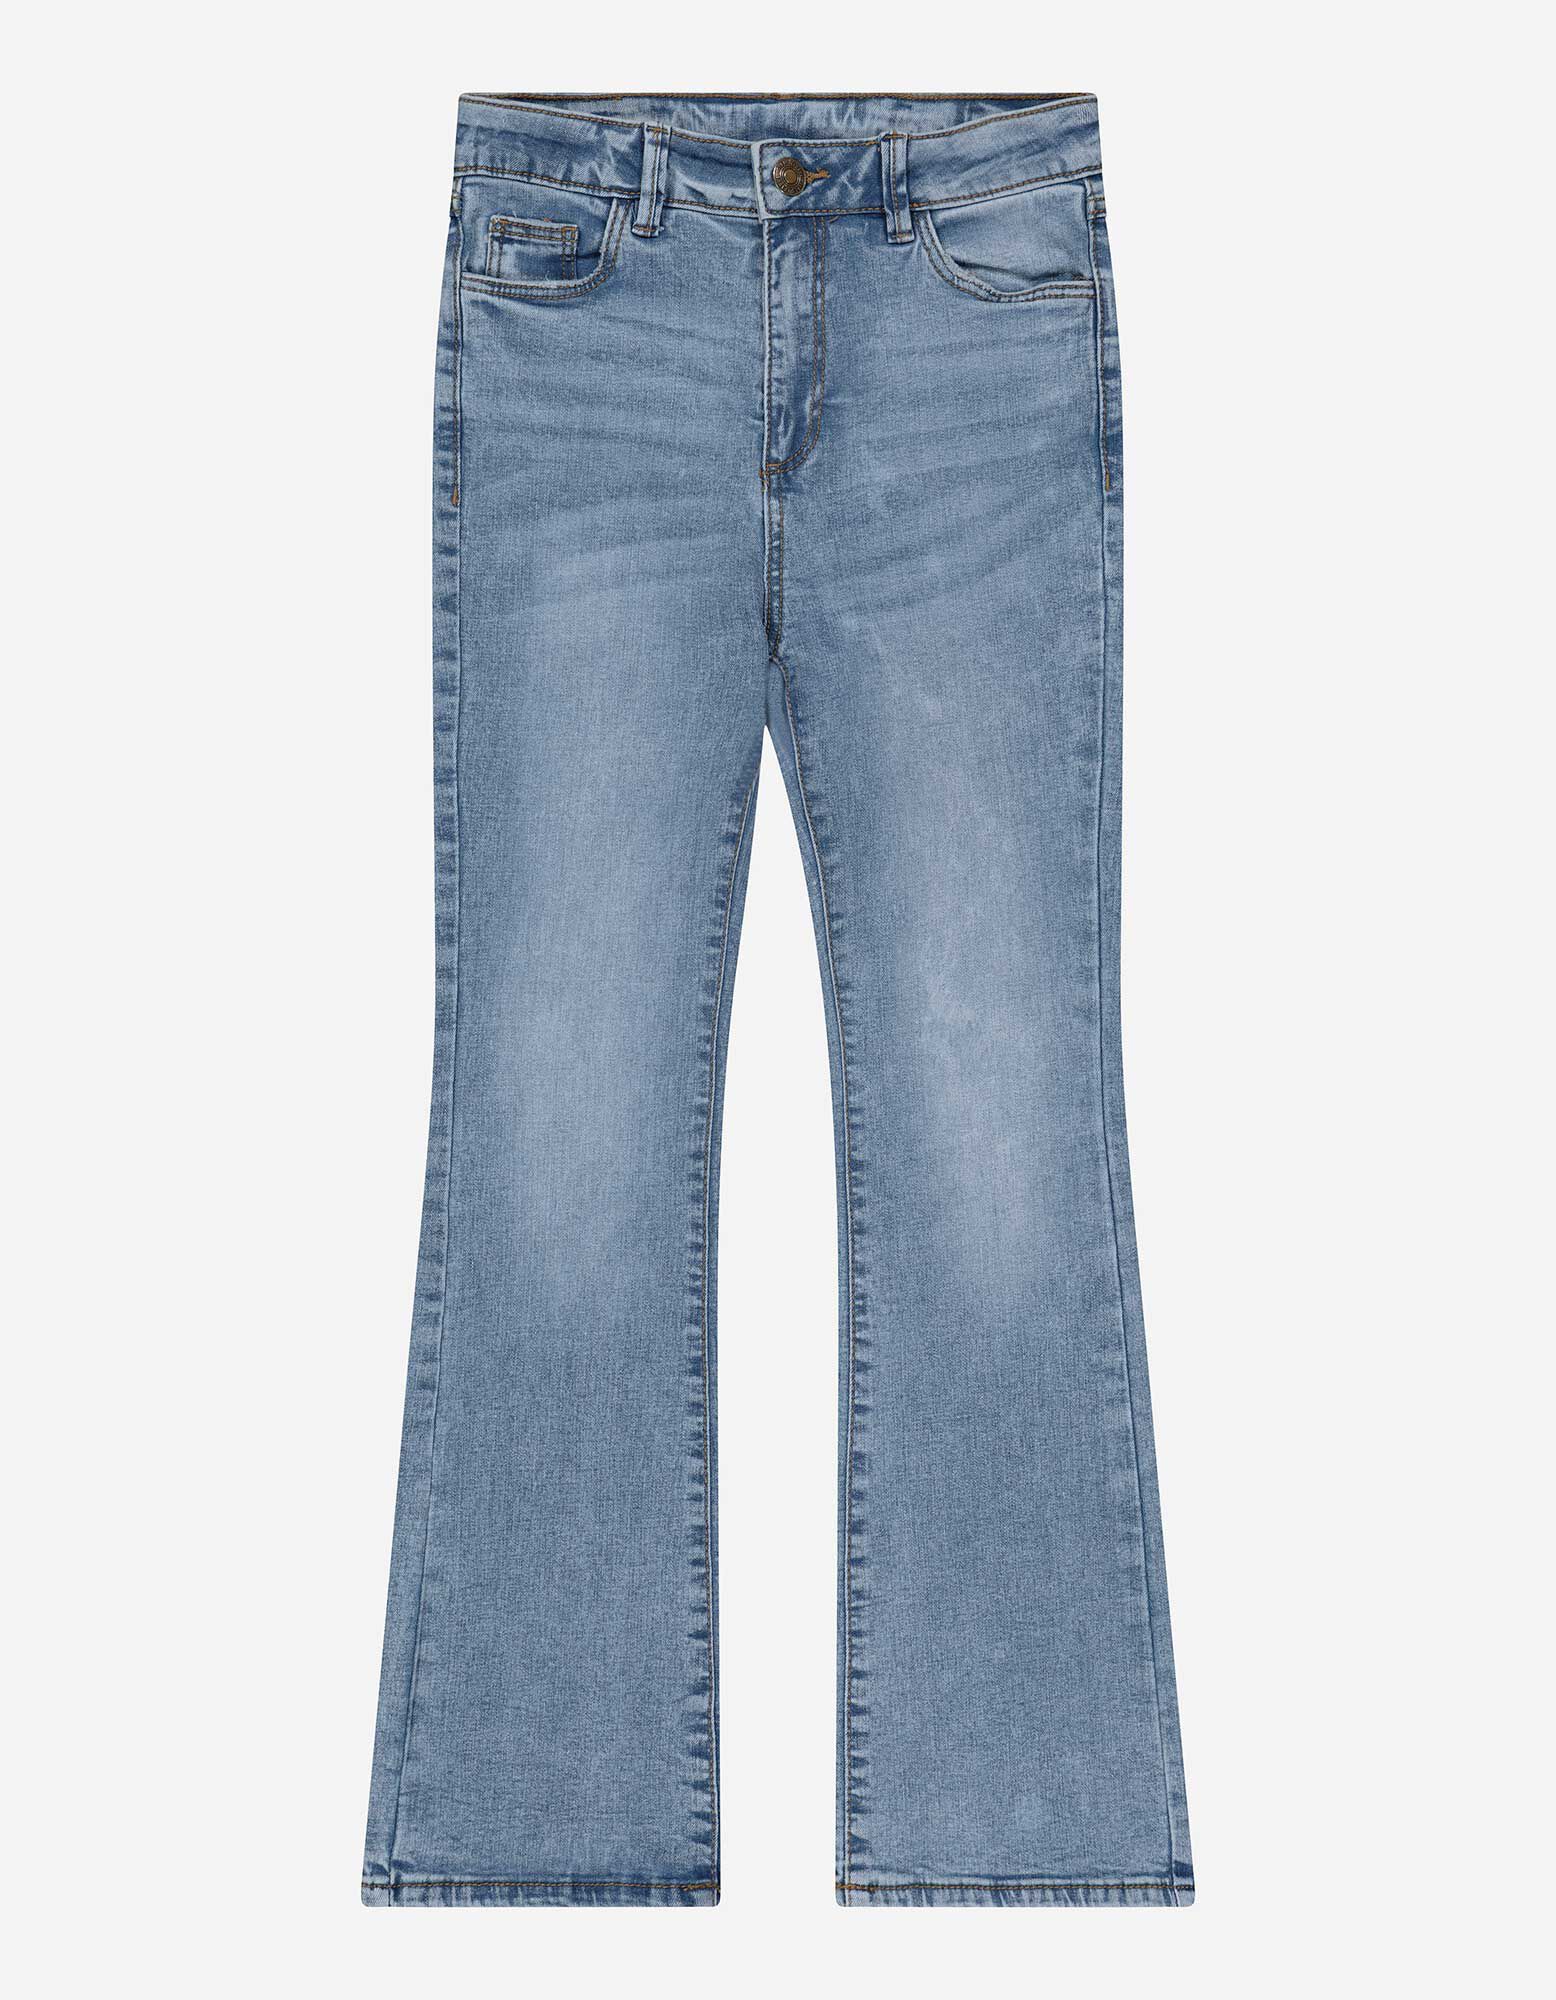 Bedruckte Jeans Mytheresa Mädchen Kleidung Hosen & Jeans Jeans 